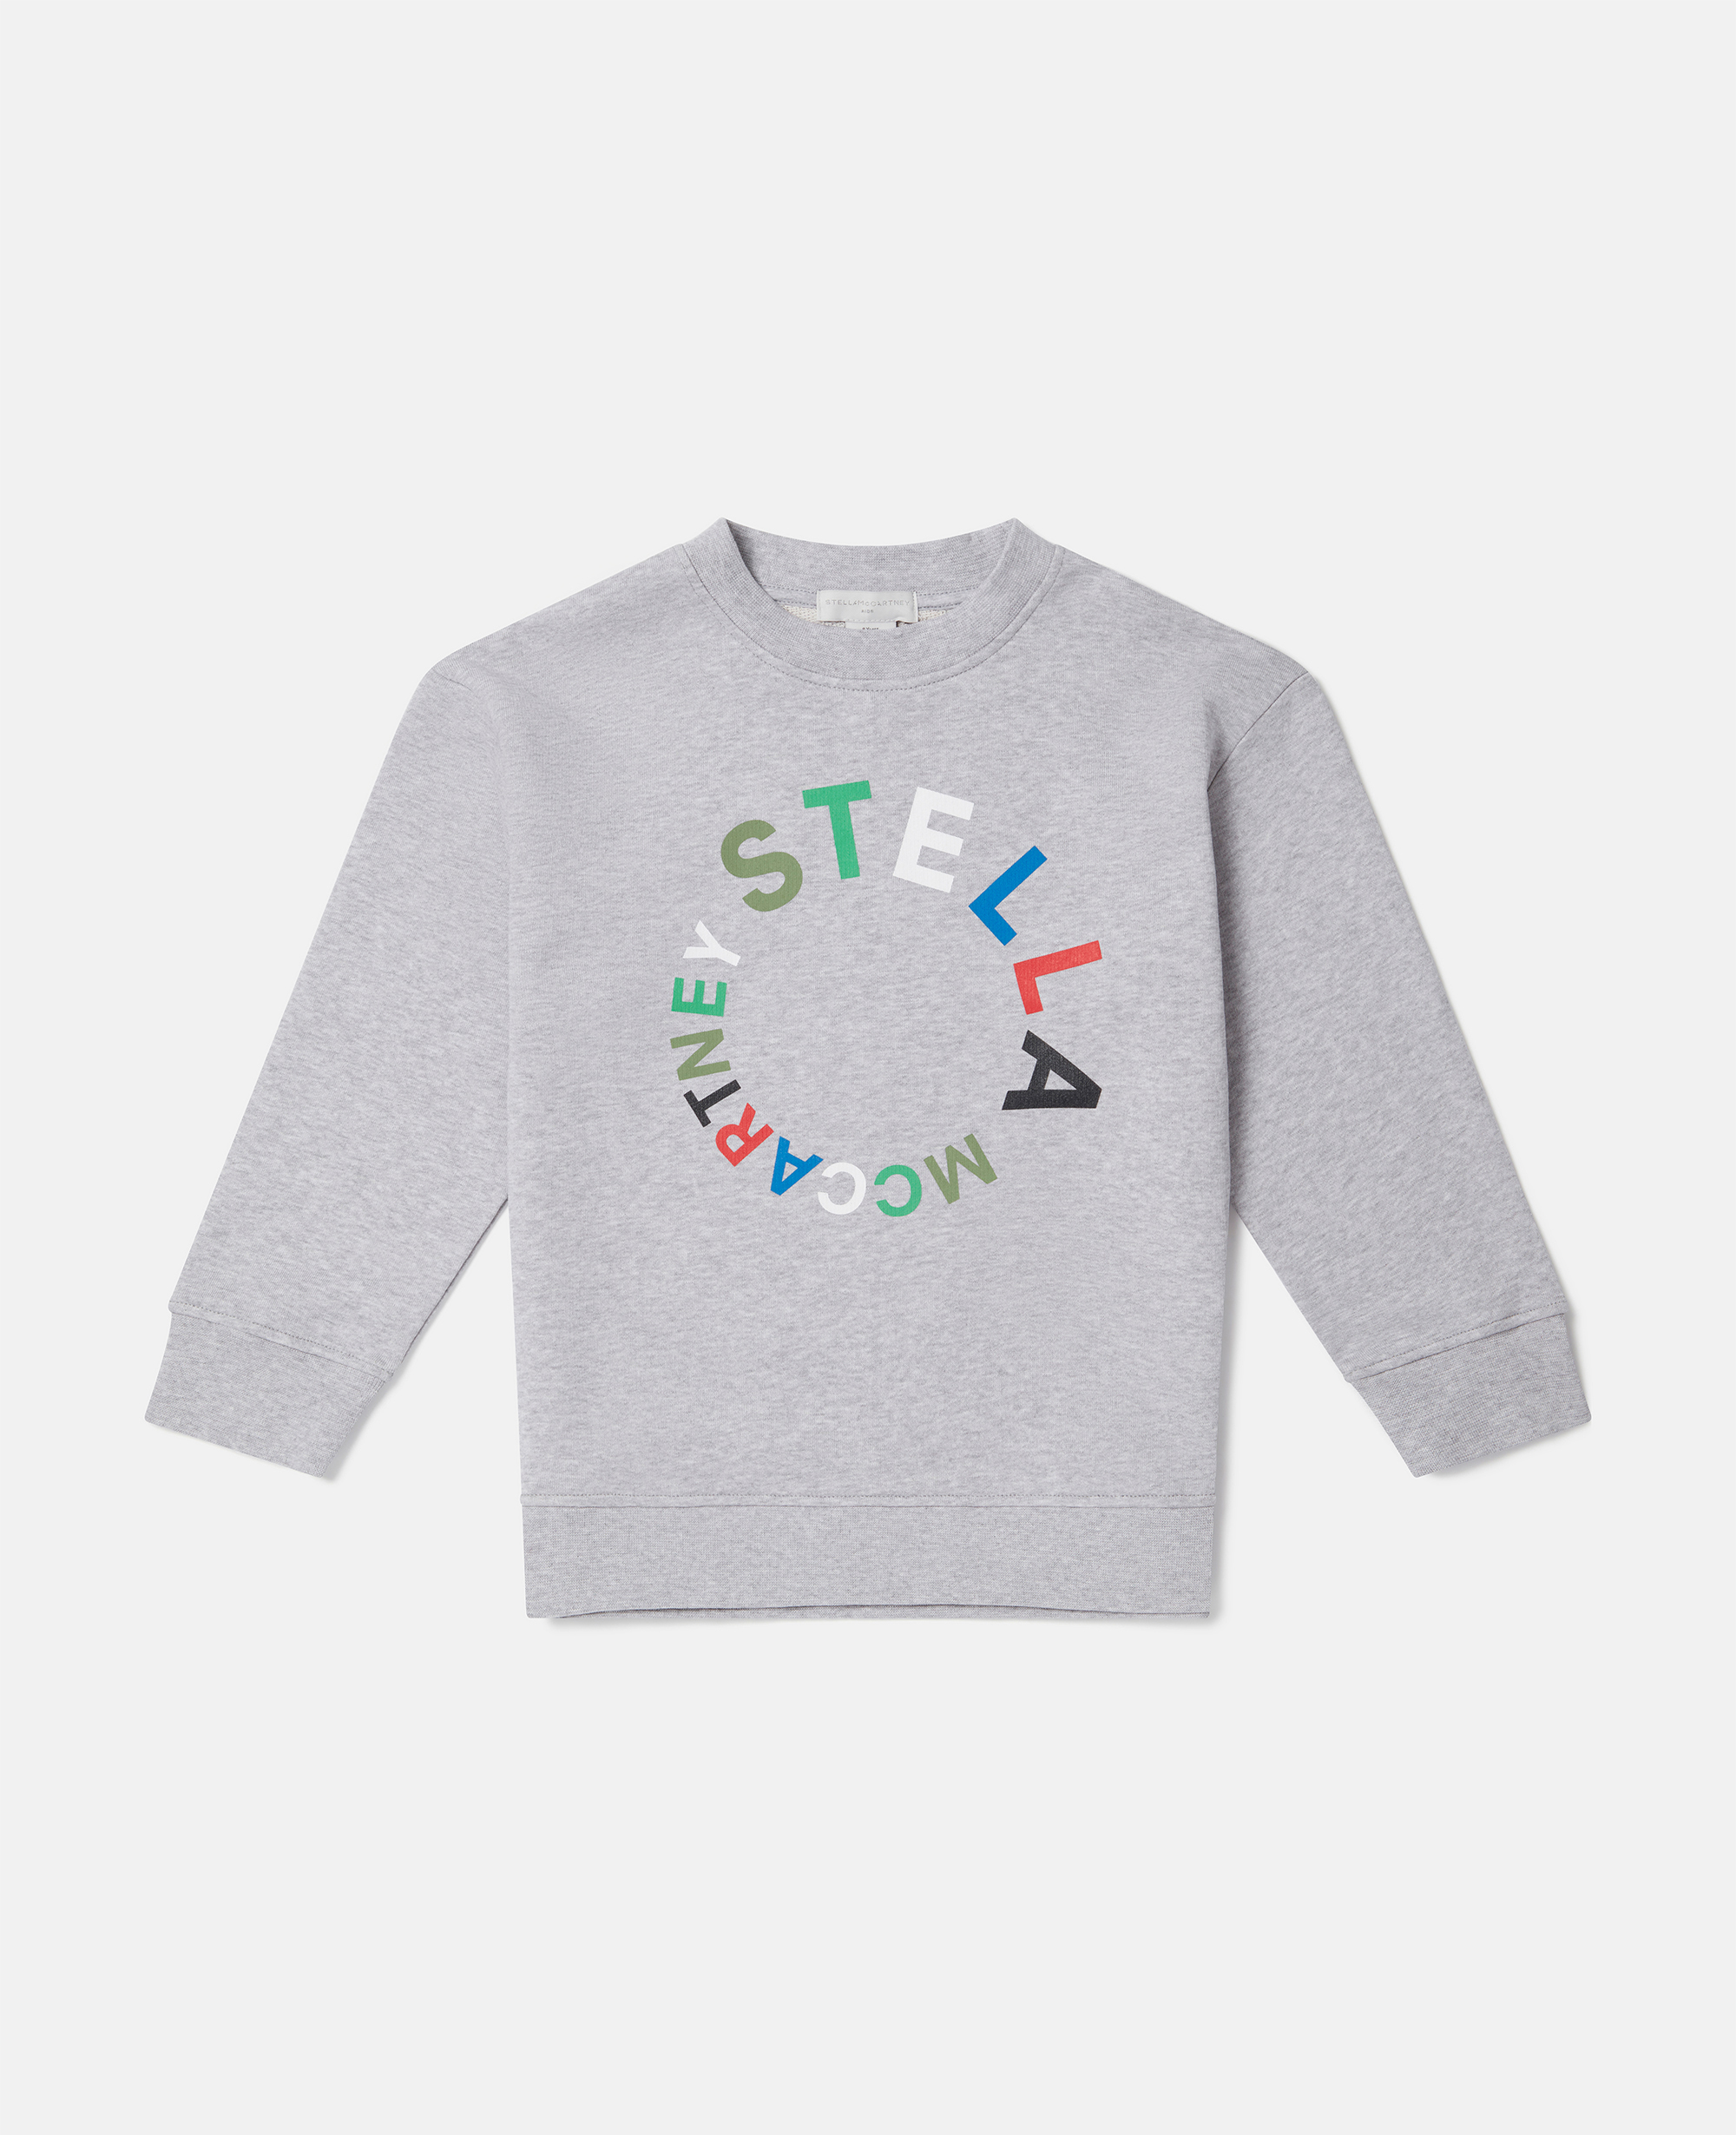 stella mccartney - circular logo embroidery sweatshirt, woman, grey, size: 4